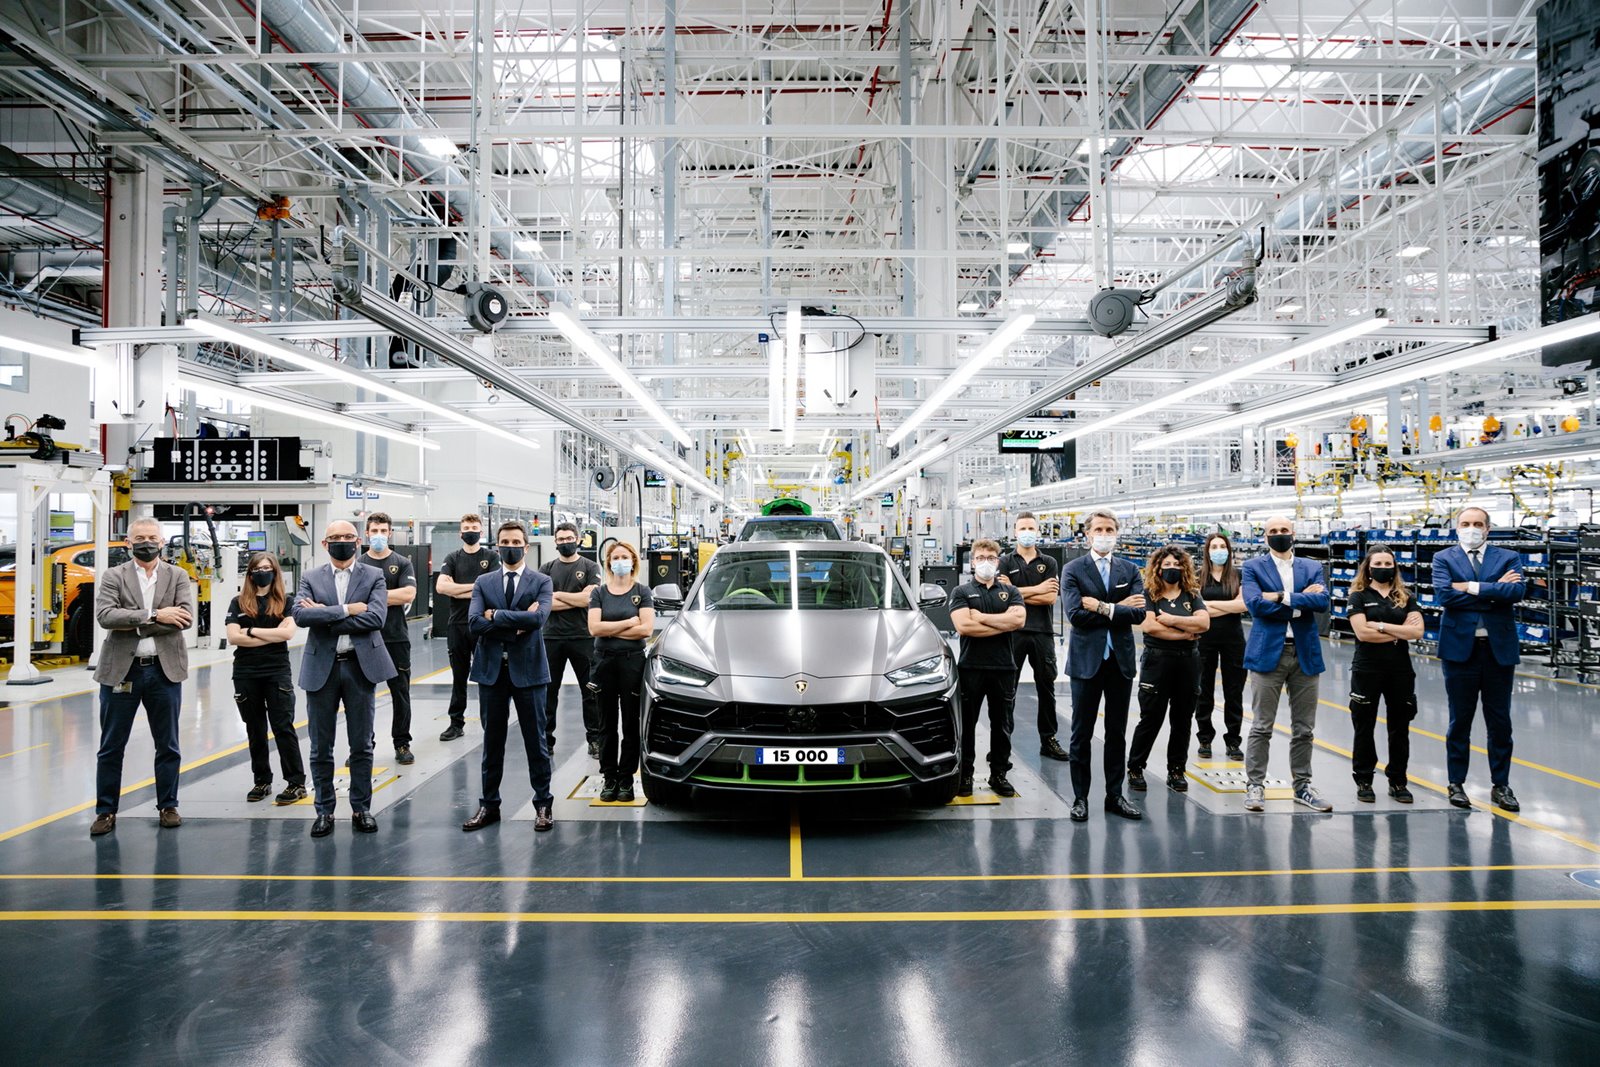 The Lamborghini Urus reaches 15,000 units manufactured